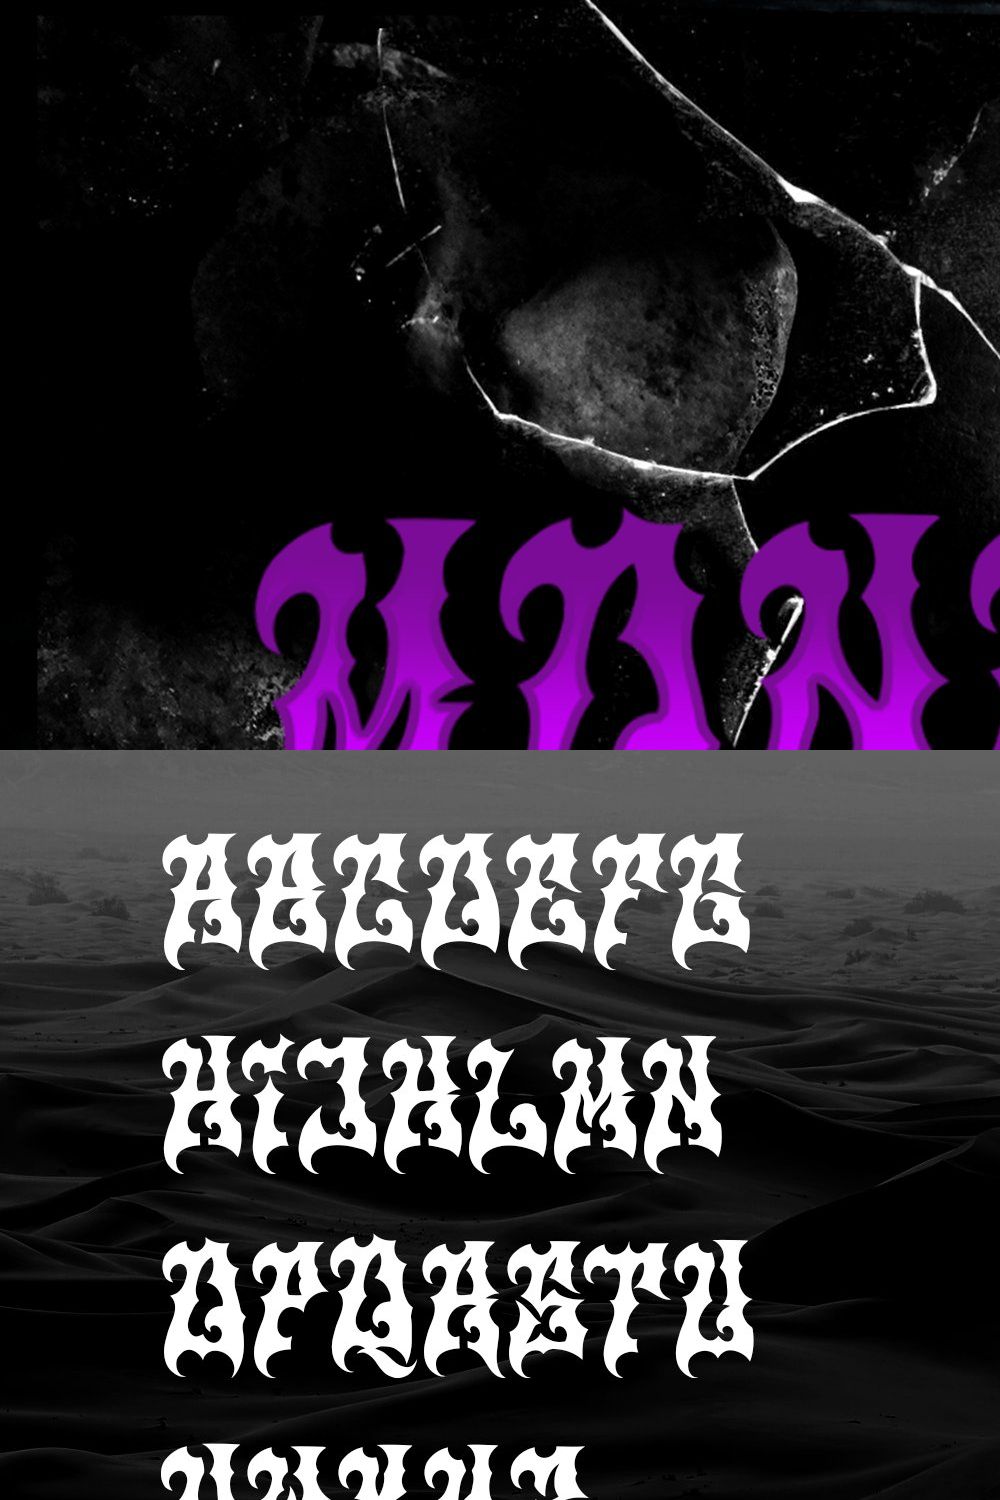 Monoload Doom Gothic Metal Font pinterest preview image.